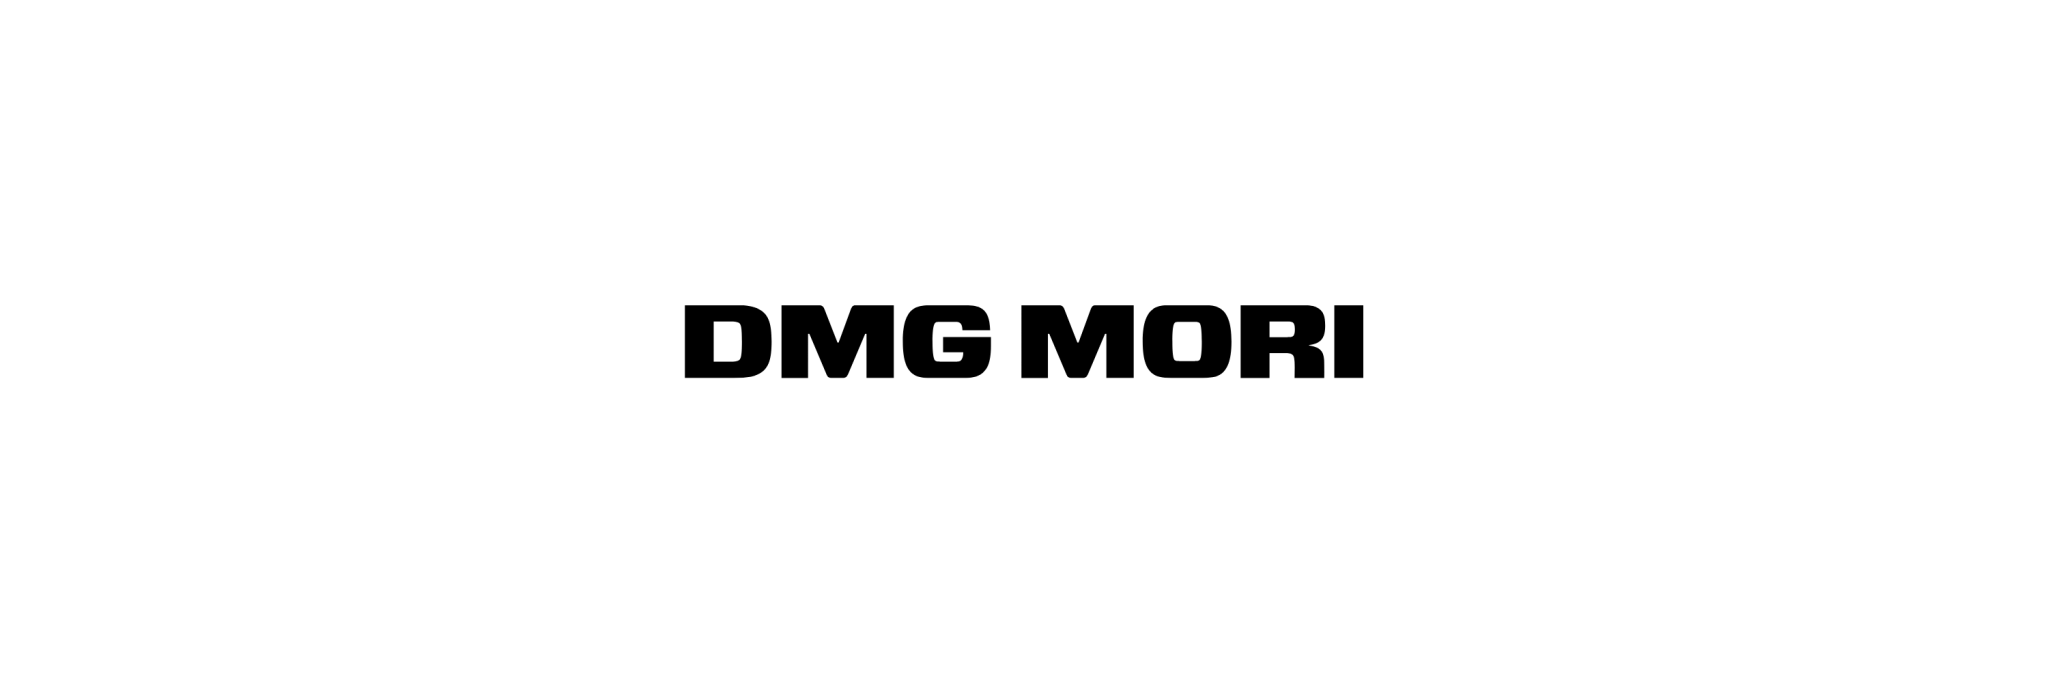 DMG MORI - Klenk Maschinenhandel